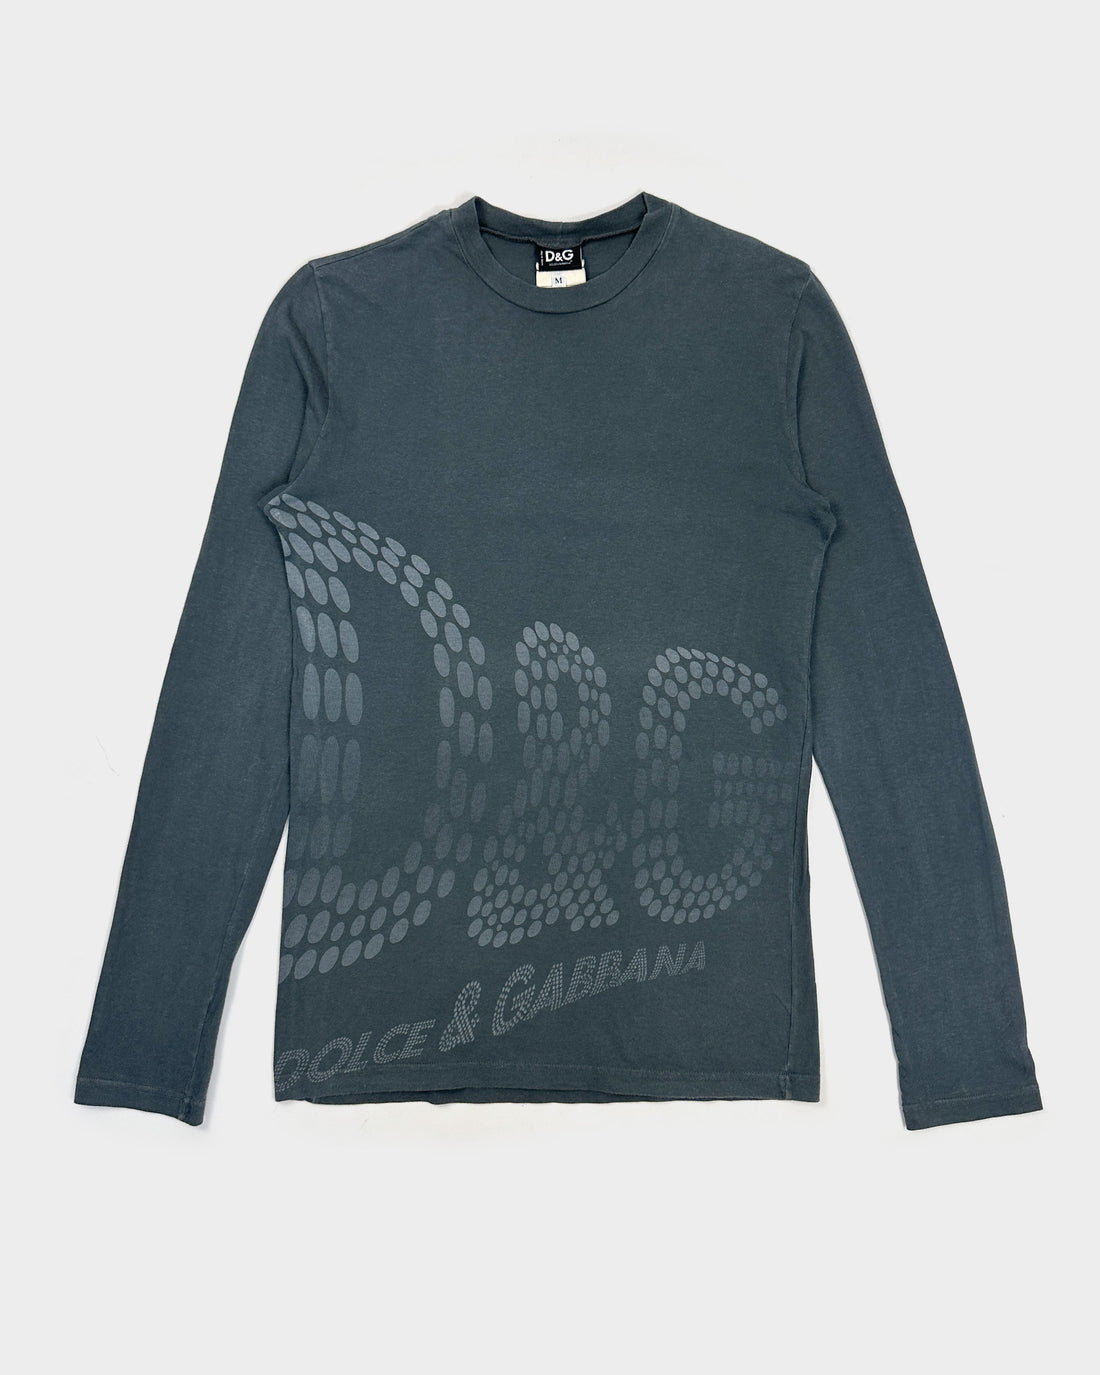 Dolce & Gabbana Dots Logo Long Sleeve Tee Top 2000's